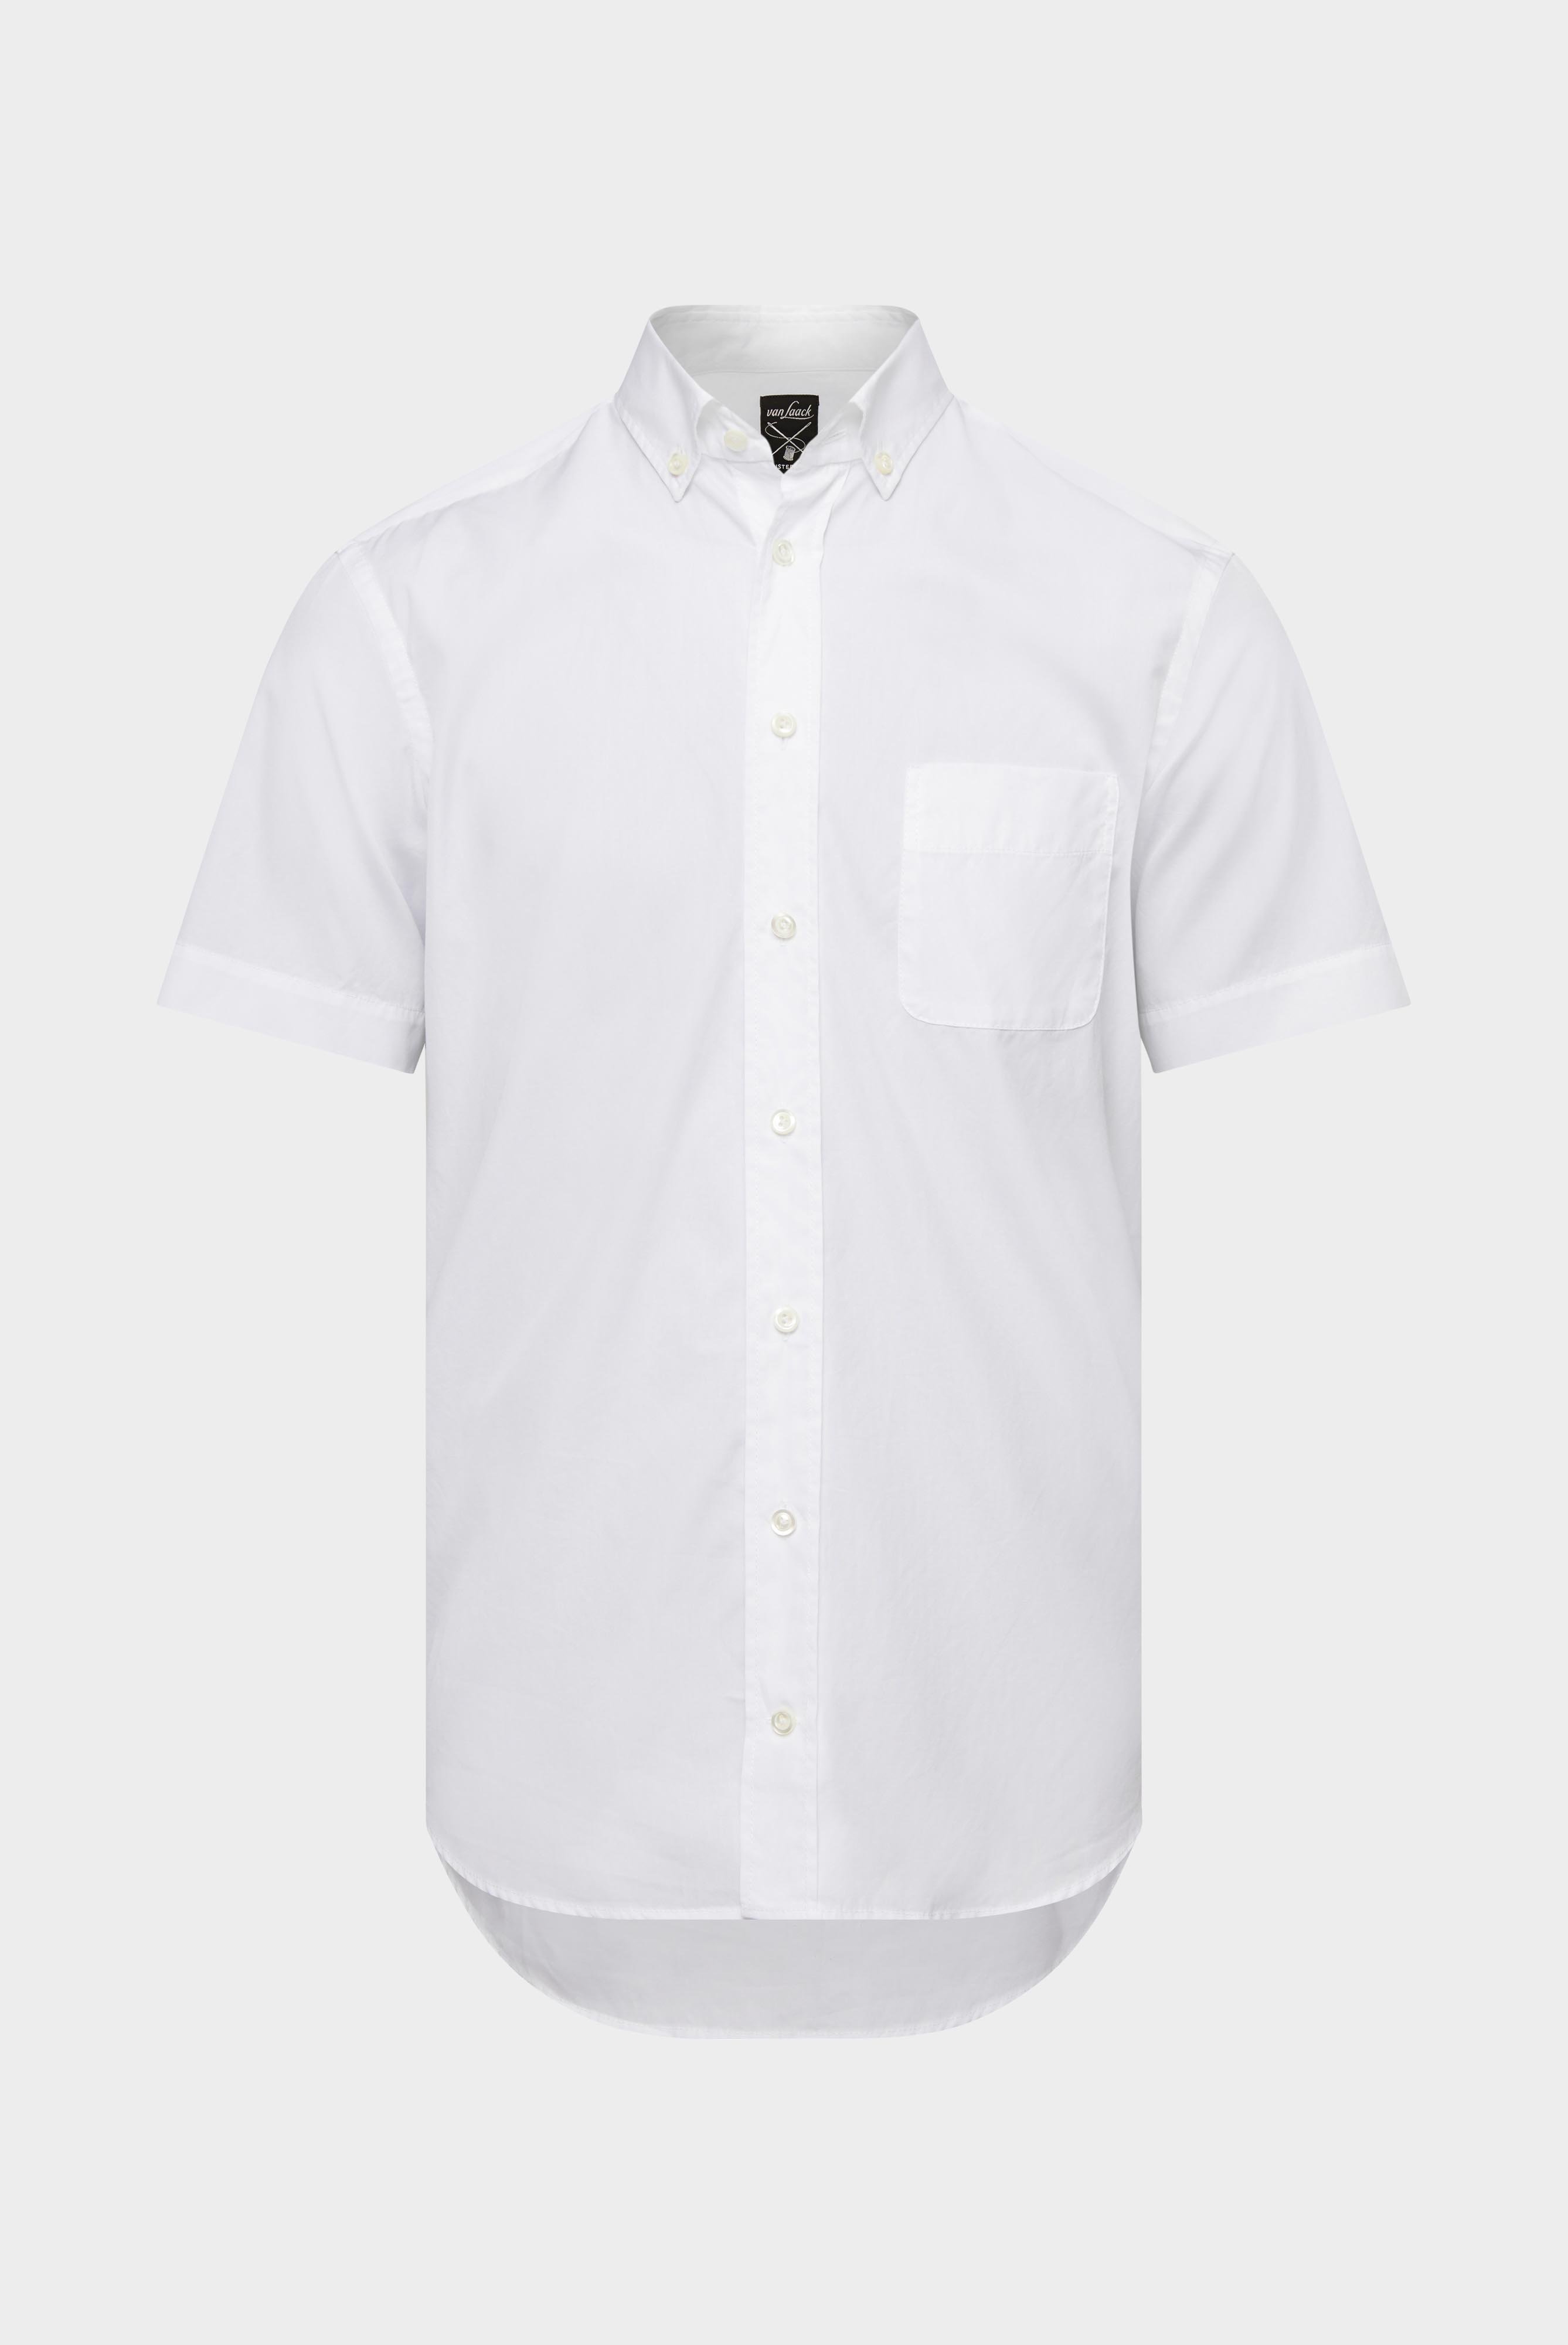 Kurzarm Hemden+Kurzärmliges Hemd aus Baumwollpopeline+20.2053.Q2.130648.000.38